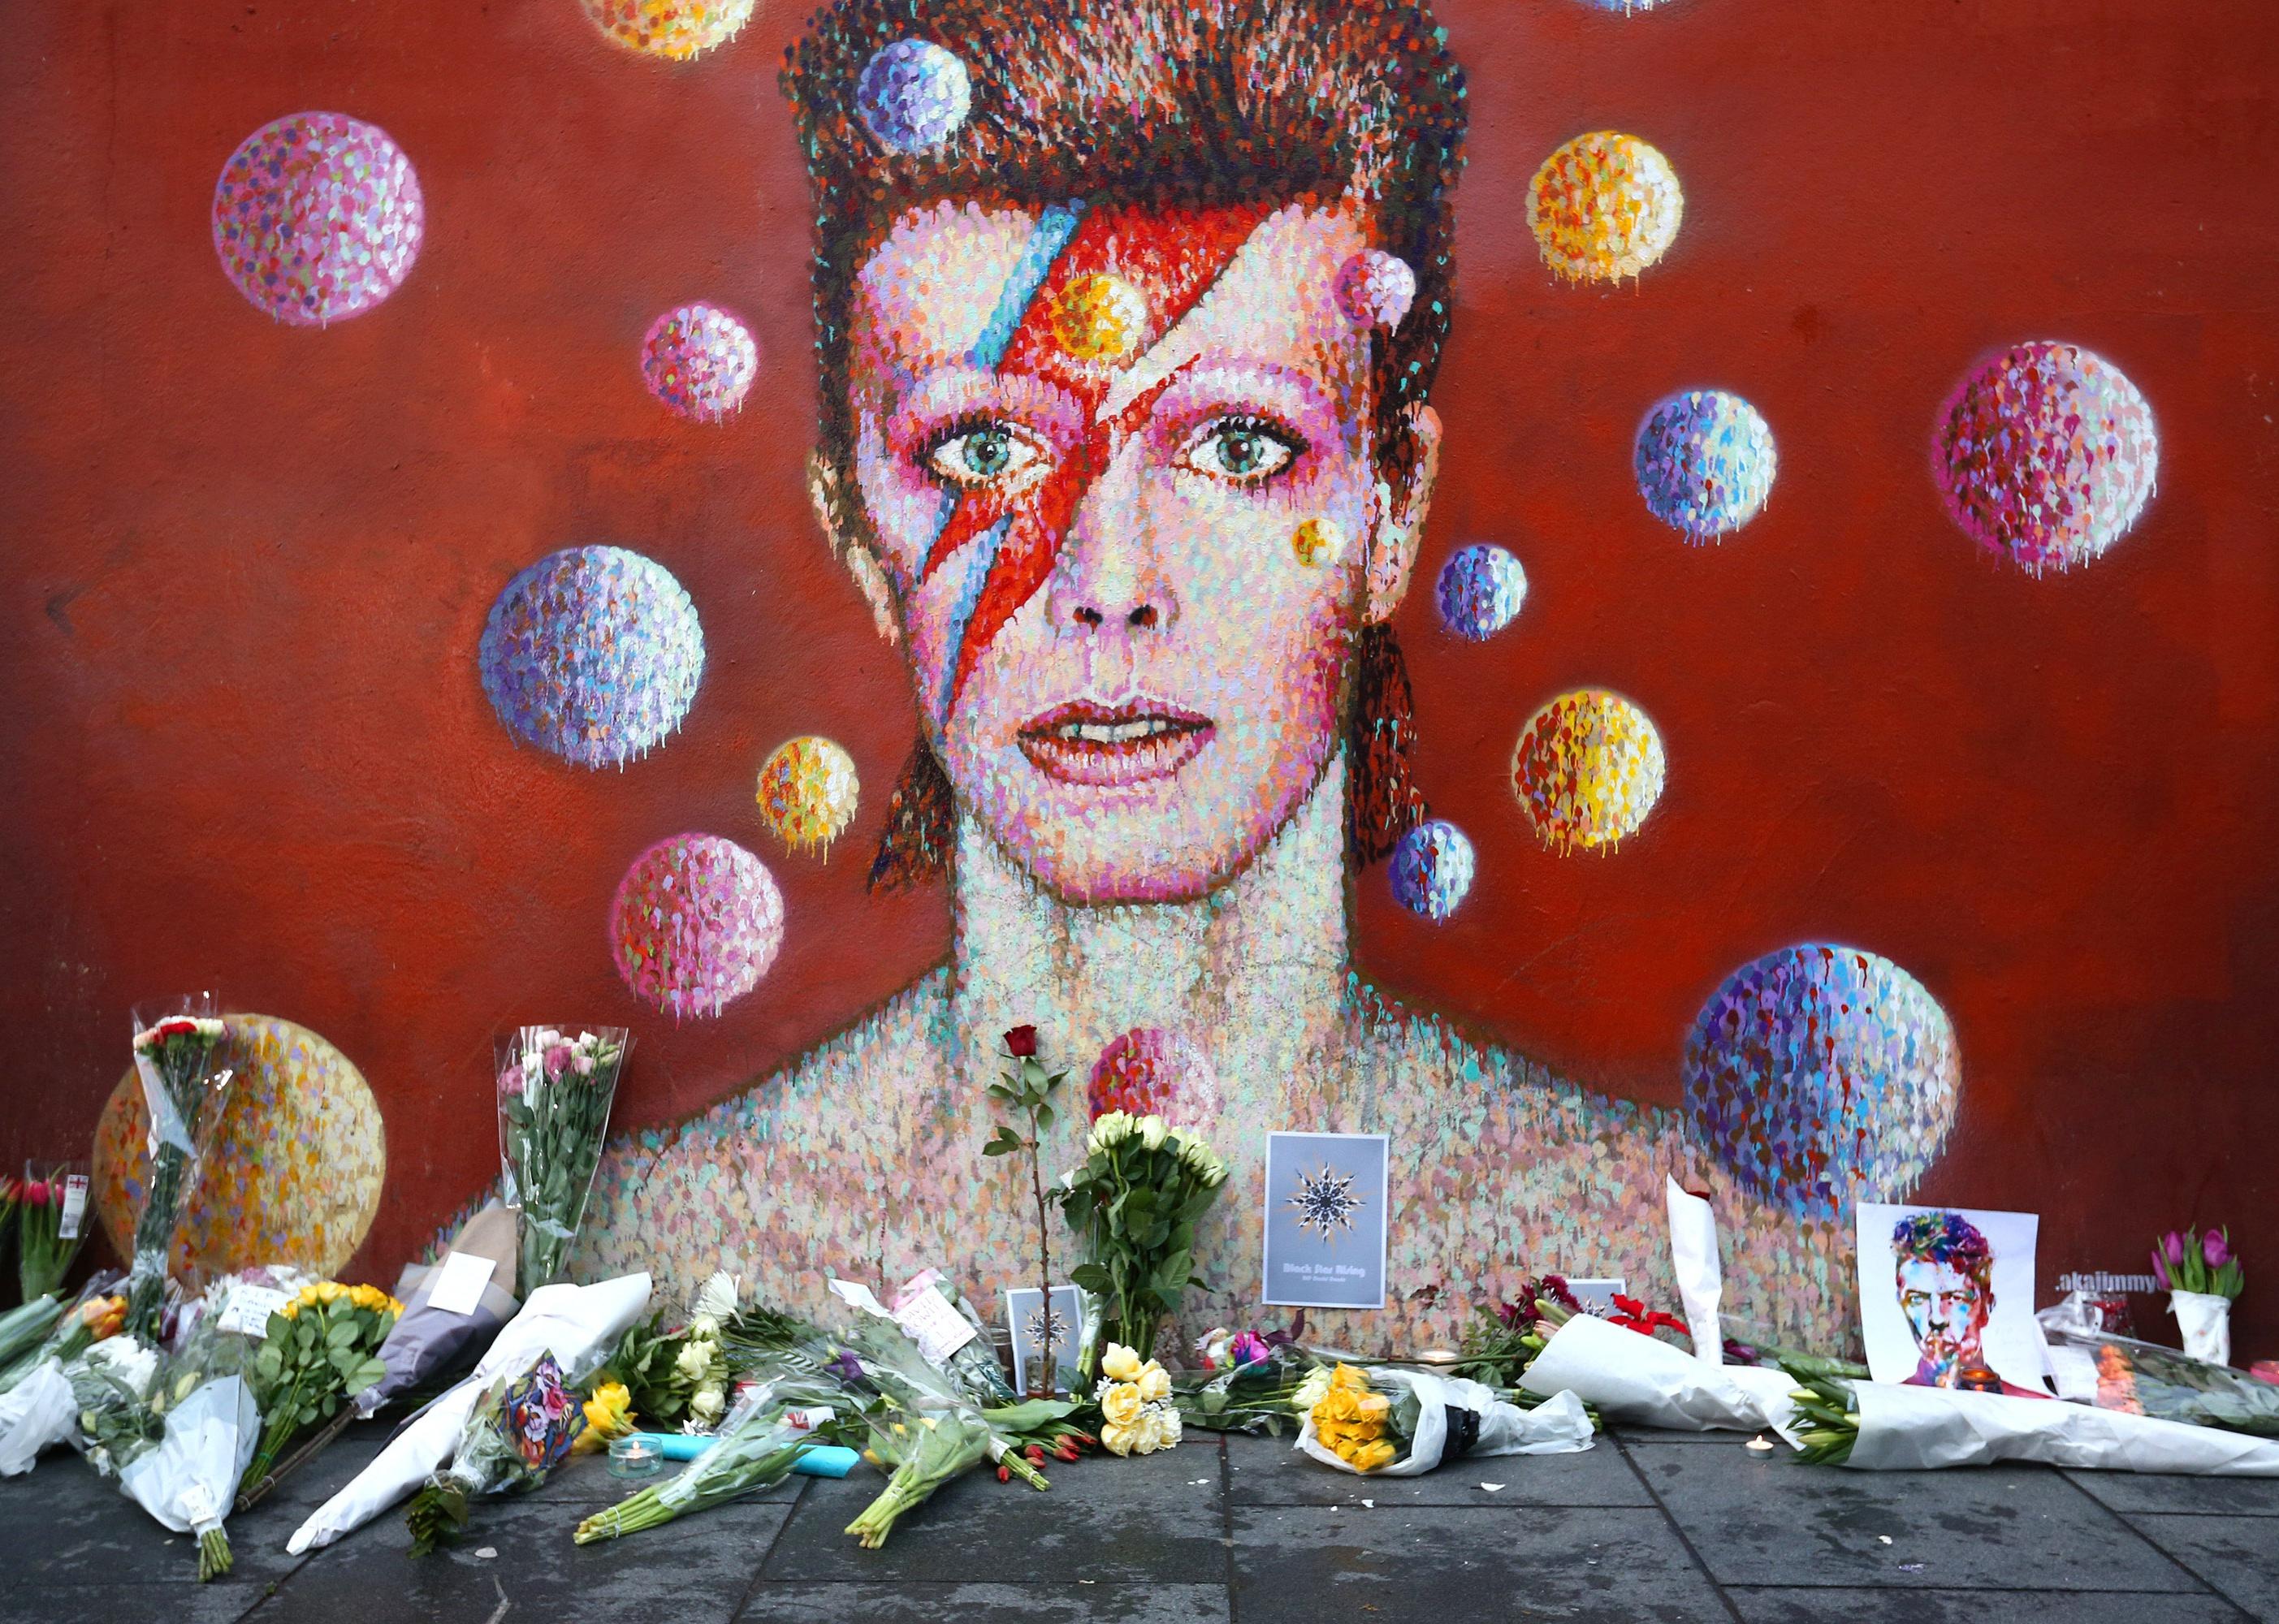 A mural of David Bowie as Ziggy Stardust